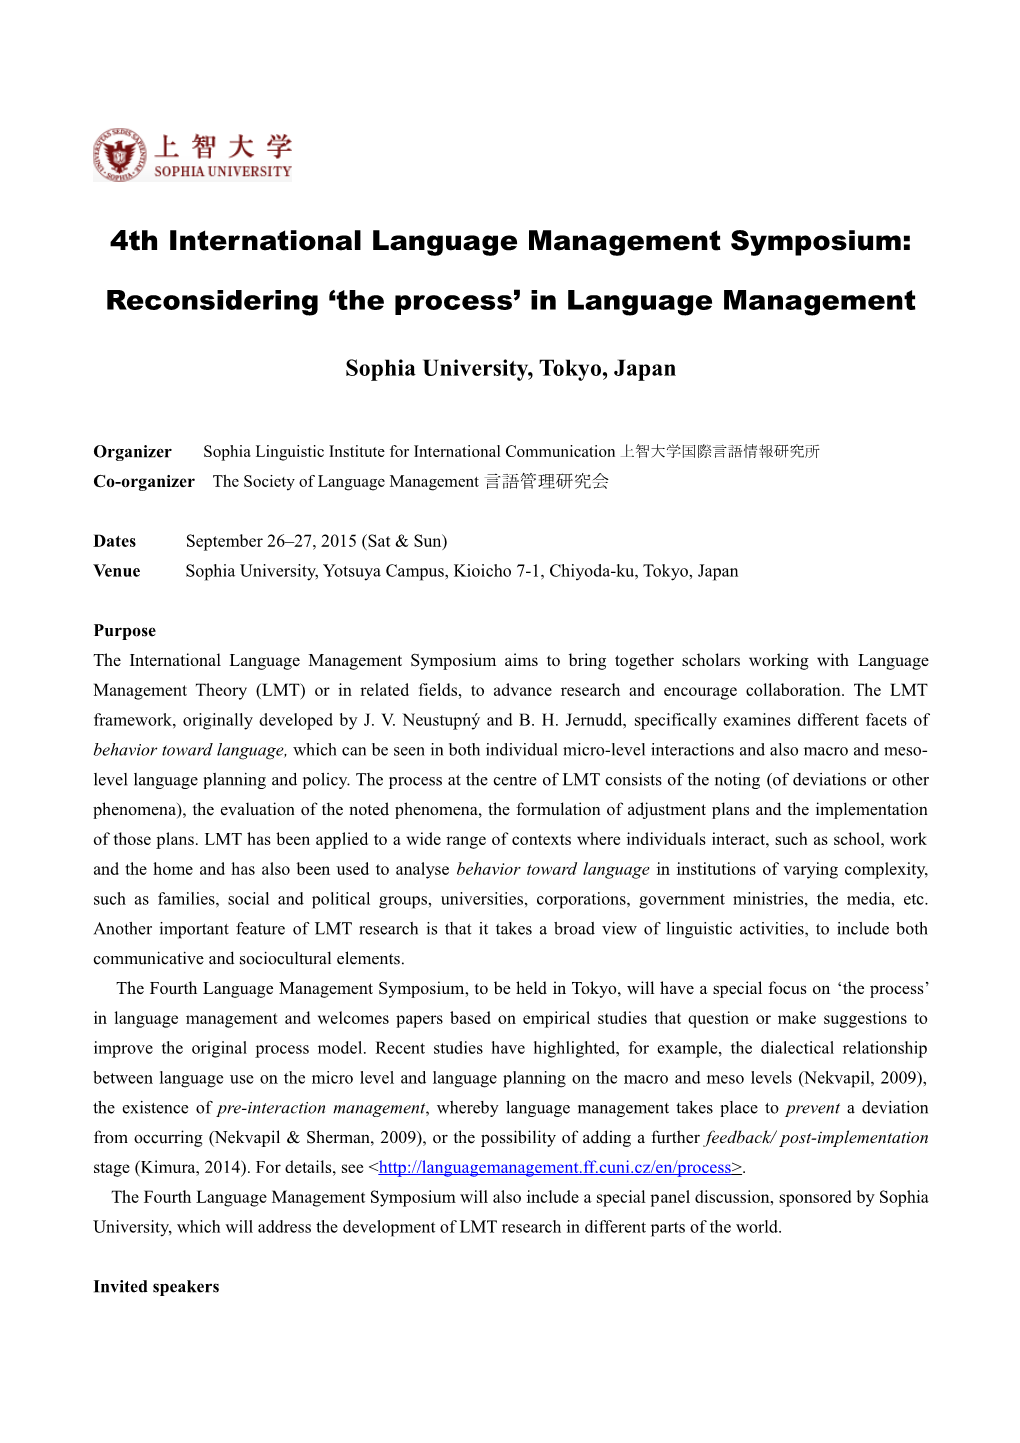 4Th International Language Management Symposium: Reconsidering the Process in Language